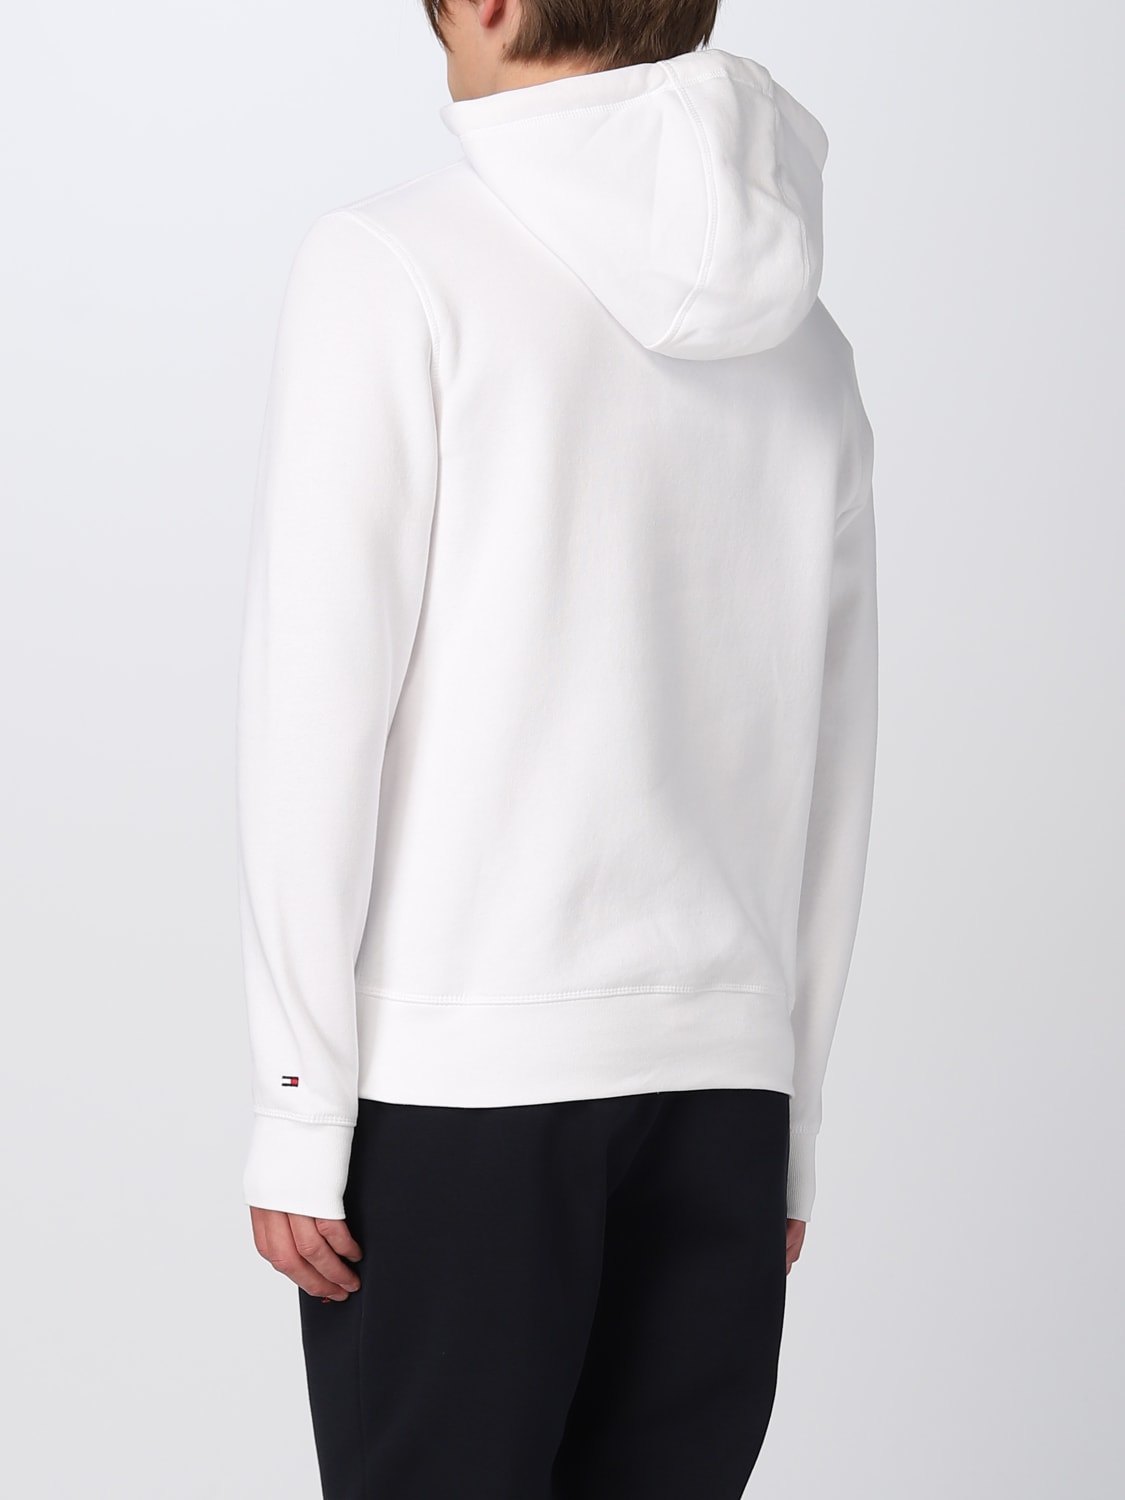 TOMMY HILFIGER: Sweatshirt homme - Blanc  Sweatshirt Tommy Hilfiger  MW0MW11599 en ligne sur